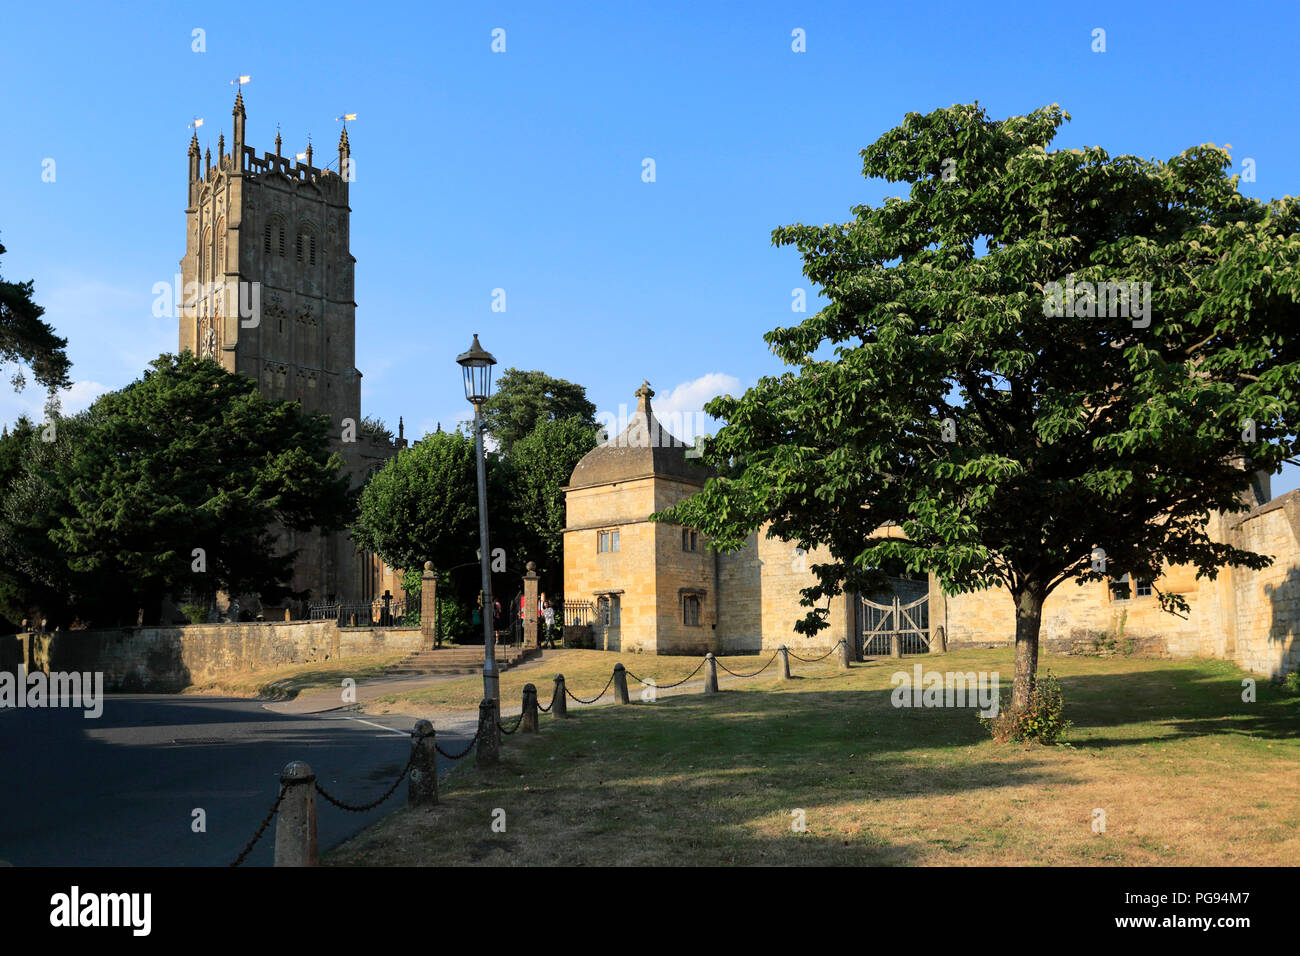 St James Parish Church, Chipping Campden Stadt, Gloucestershire Cotswolds, England, Großbritannien Stockfoto